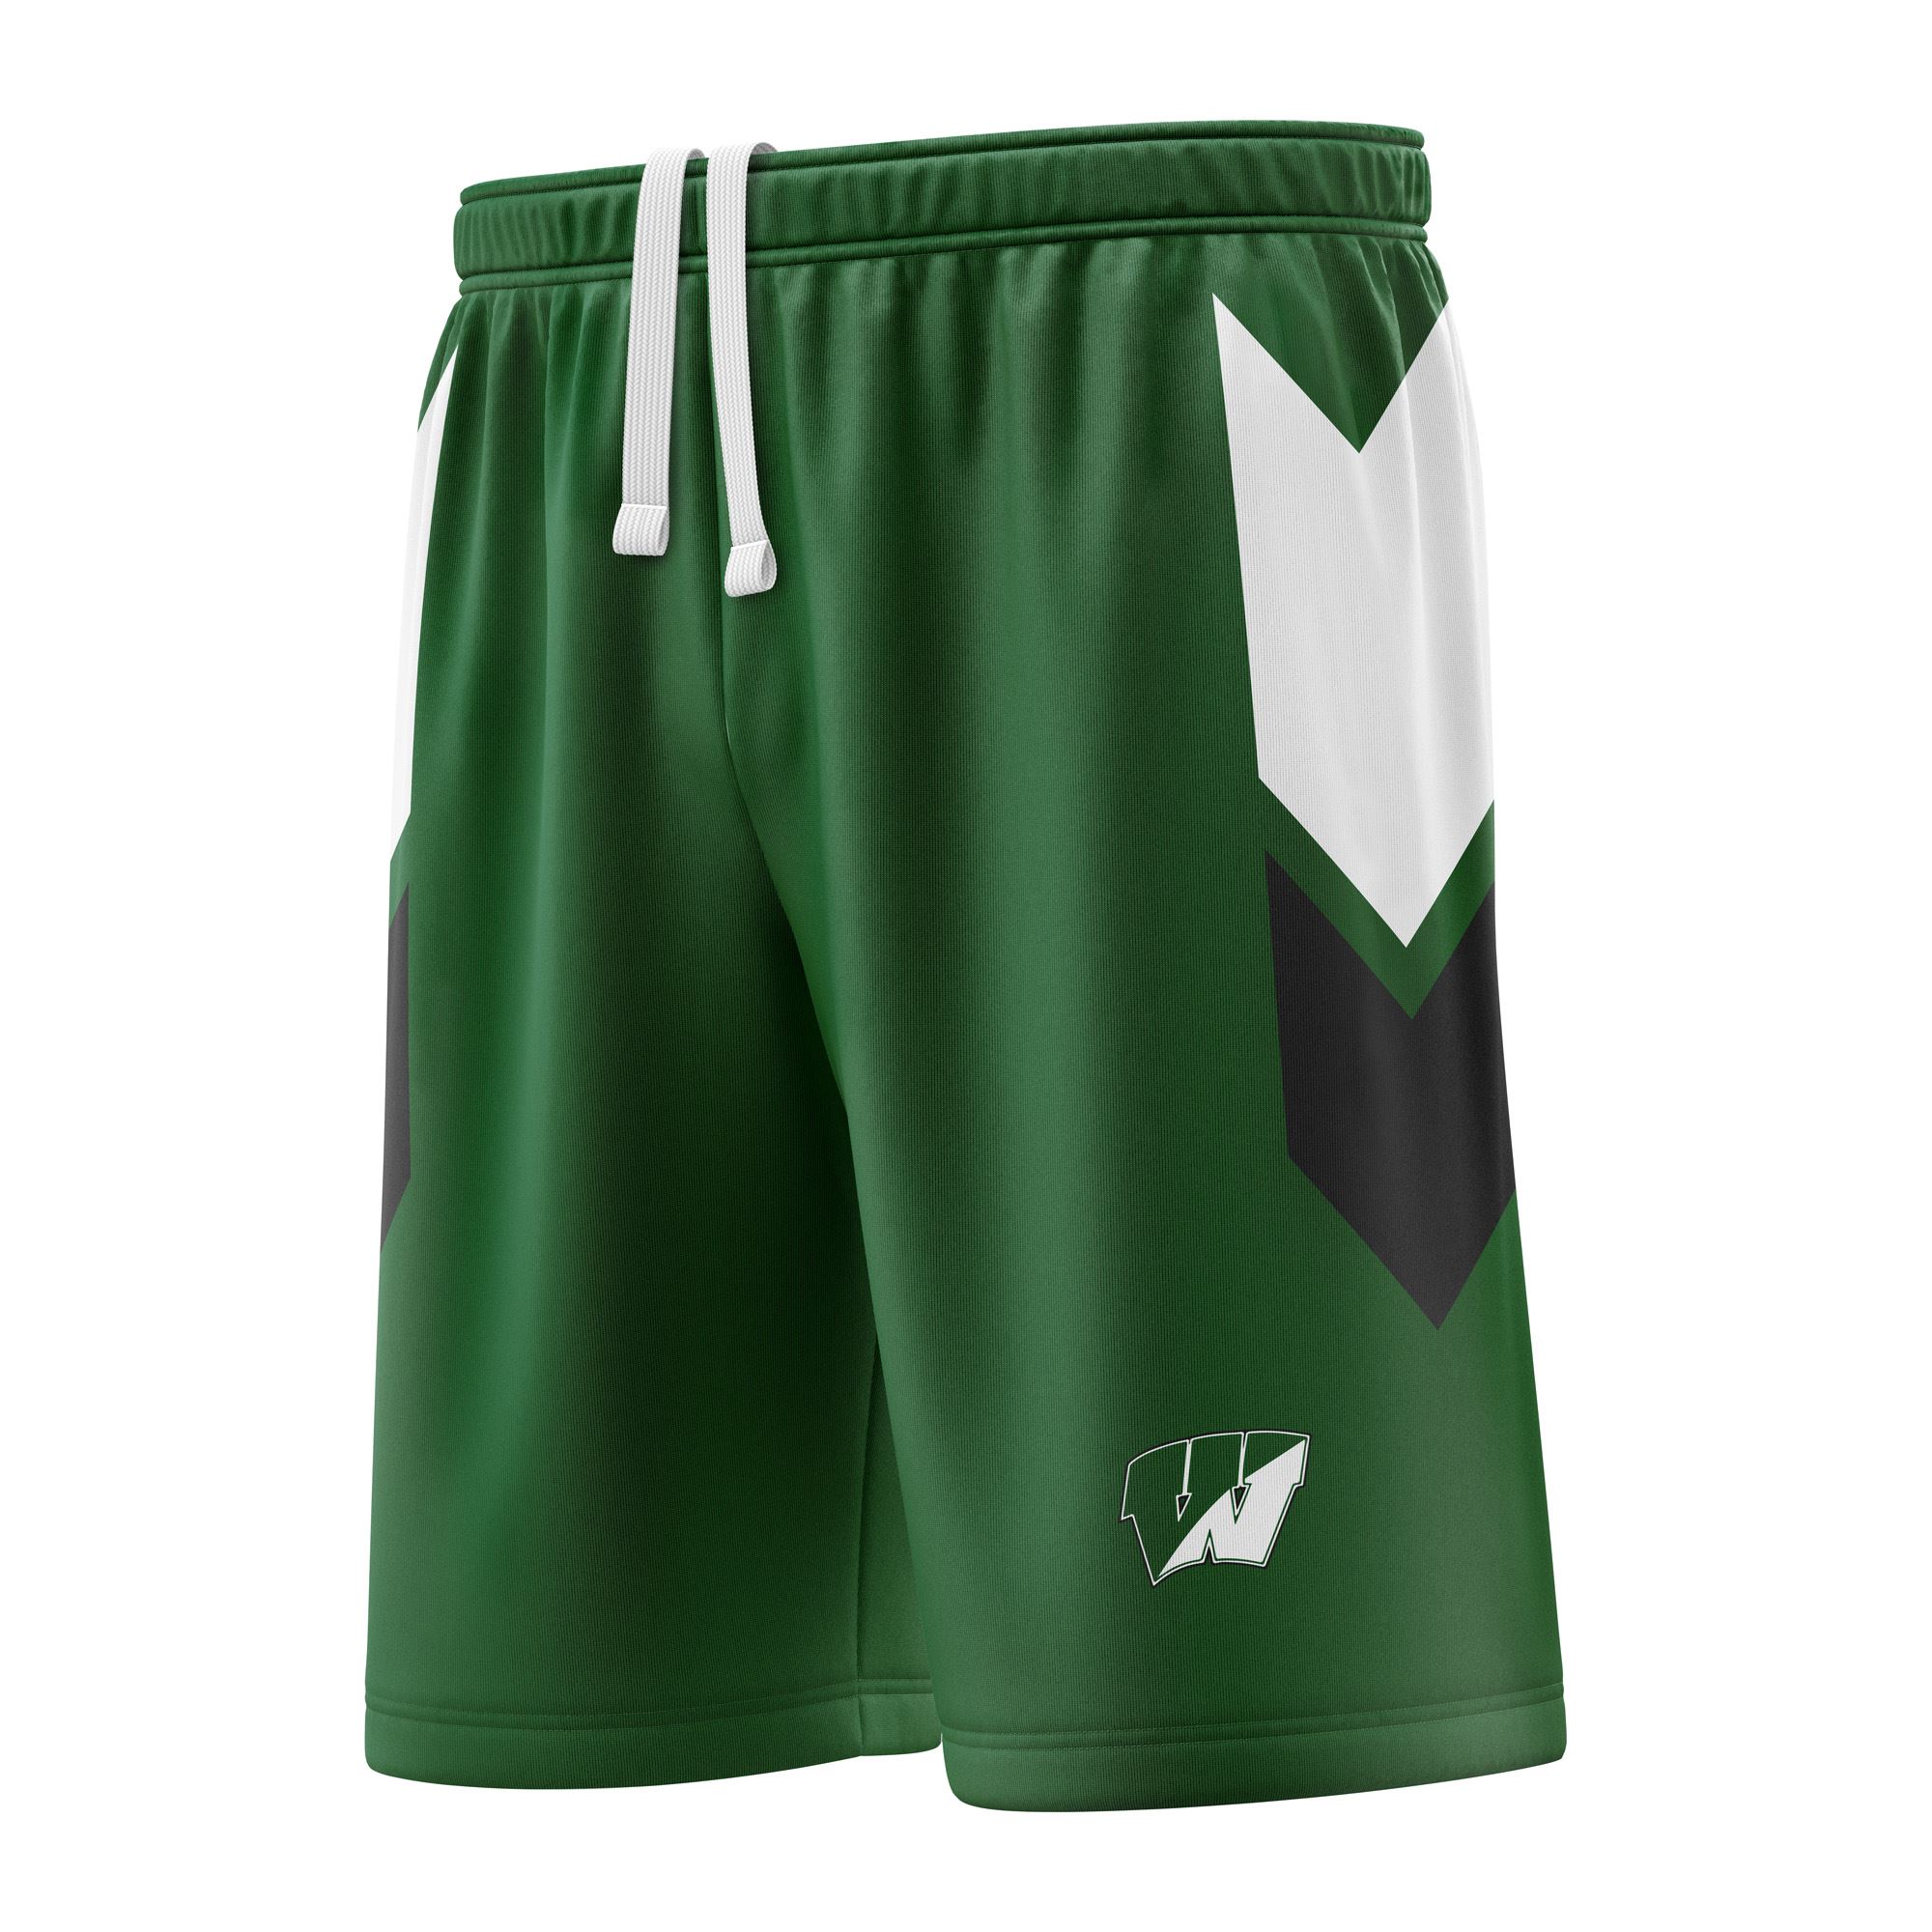 Full Dye Sub Reversible Basketball Shorts - Varsity Pattern left view